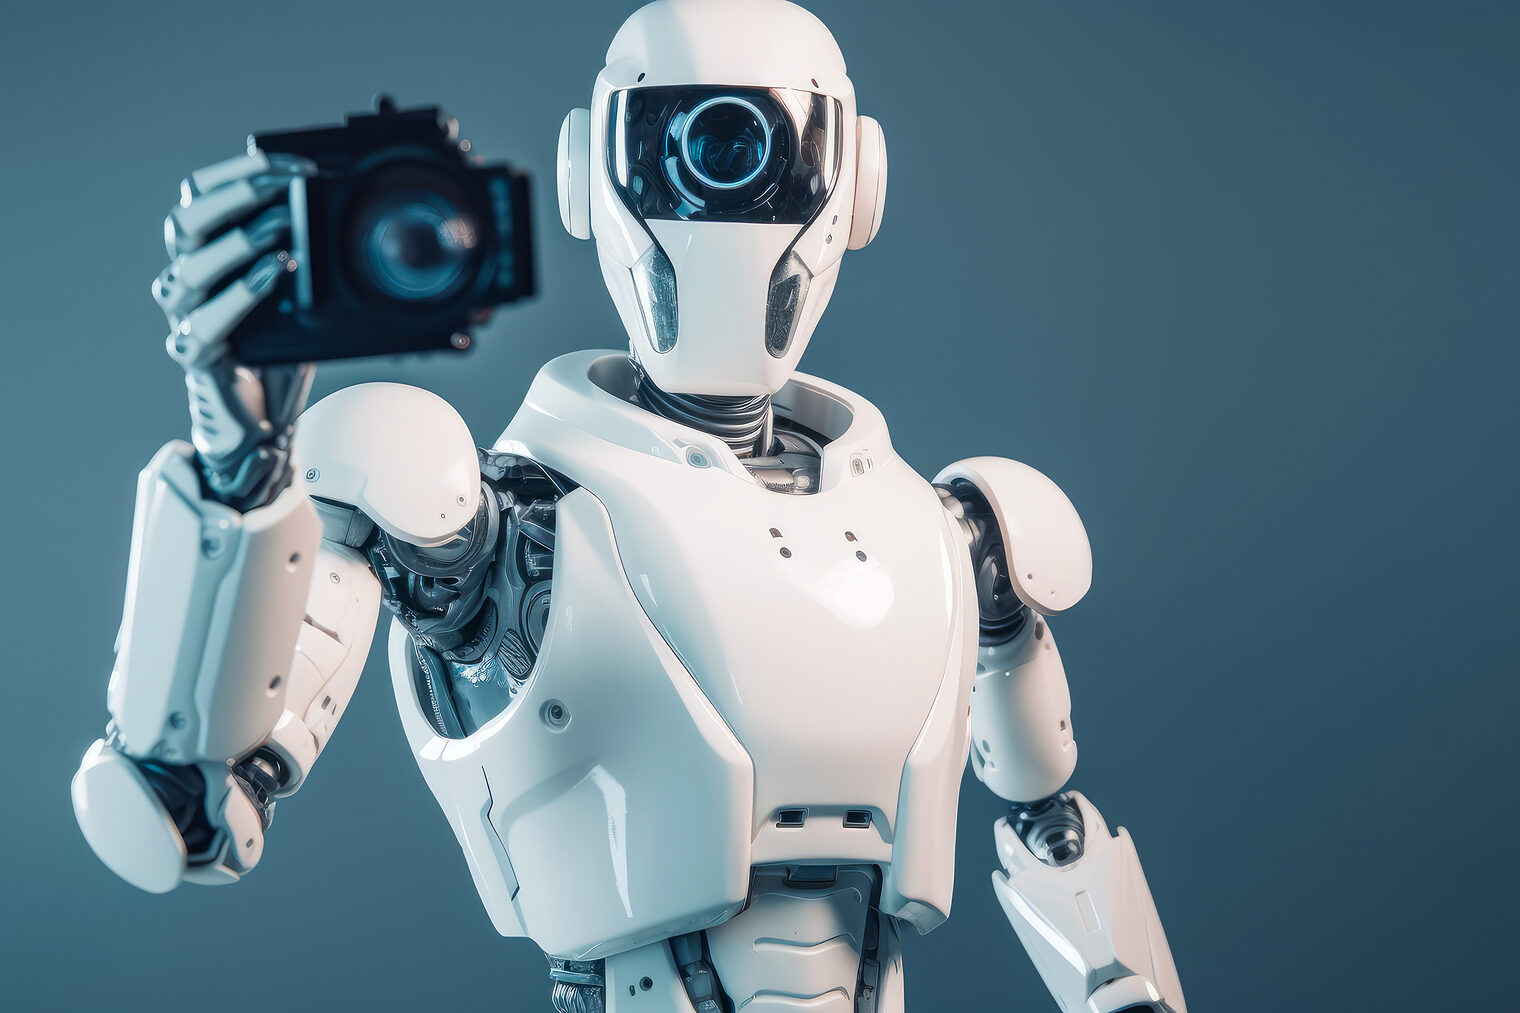 Roboter fotografiert mit Kamera, Fotoapparat, KI, Künstliche Intelligenz, Cyborg. Bild: FatiF / stock.adobe.com